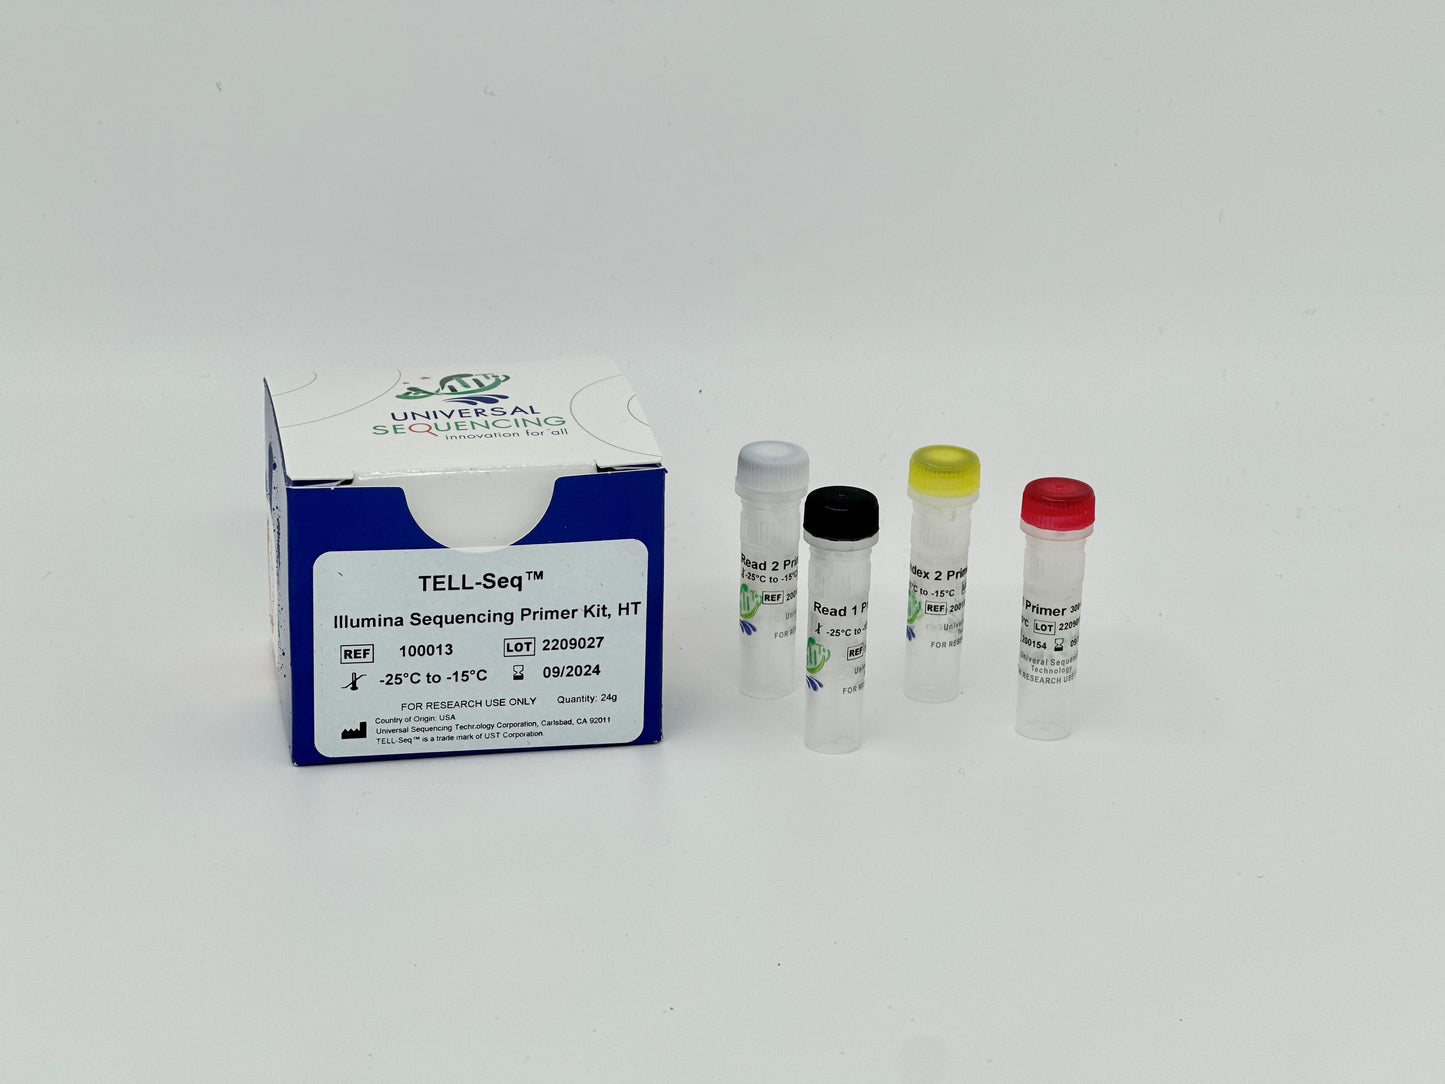 TELL-Seq™ Microbial Library Prep Kit STD24, RUO